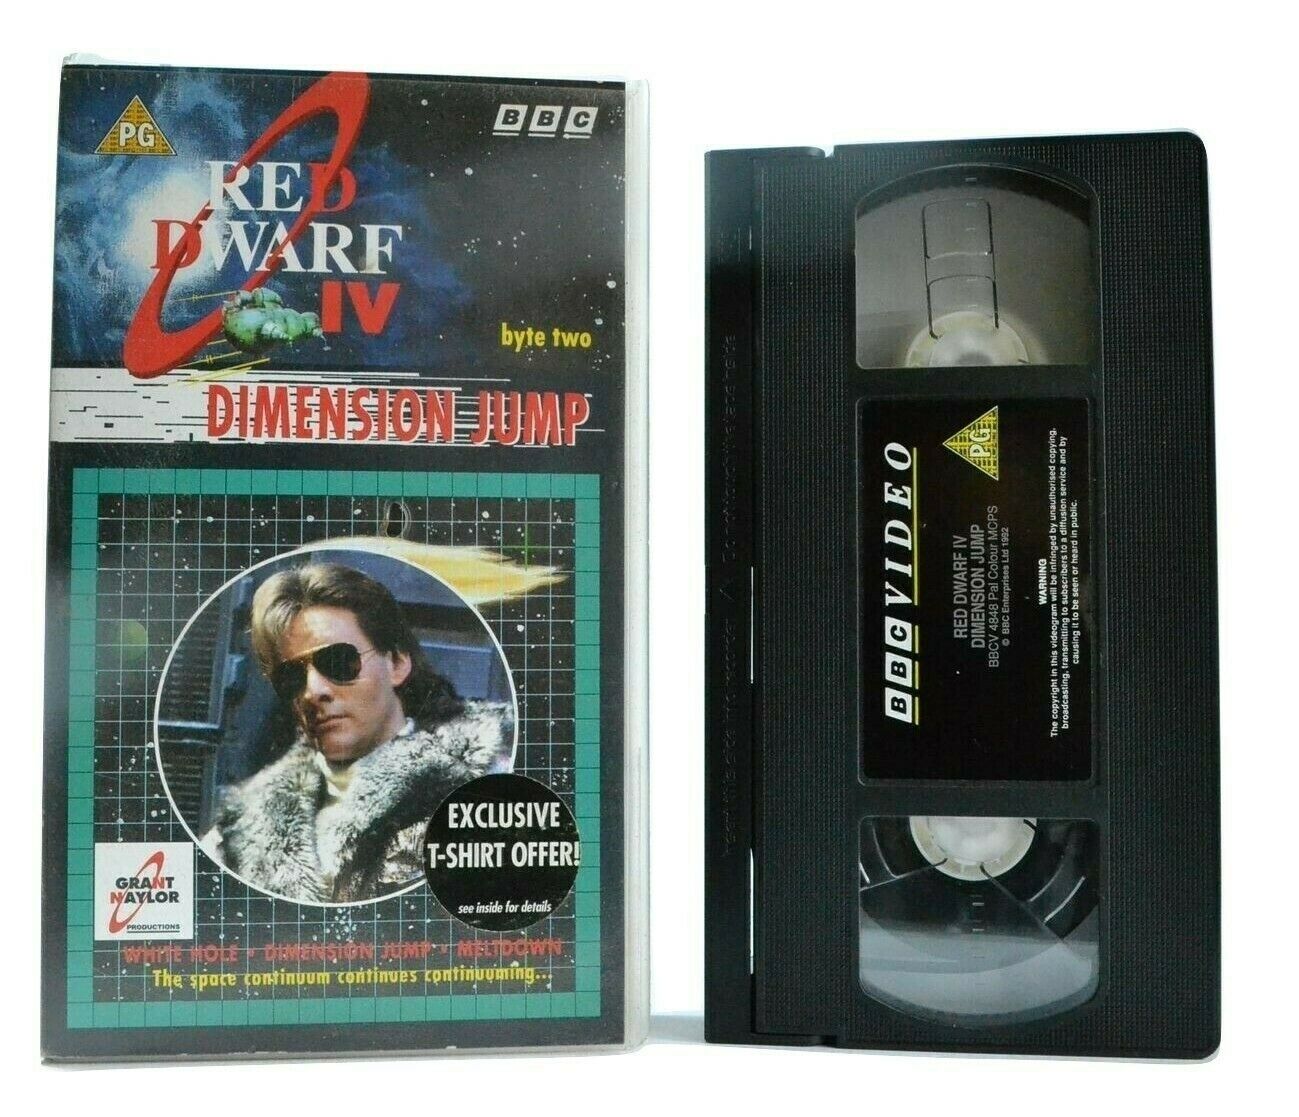 Red Dwarf 4: Dimension Jump - British Sci-Fi Comedy Franchise - 3 Episodes - VHS-